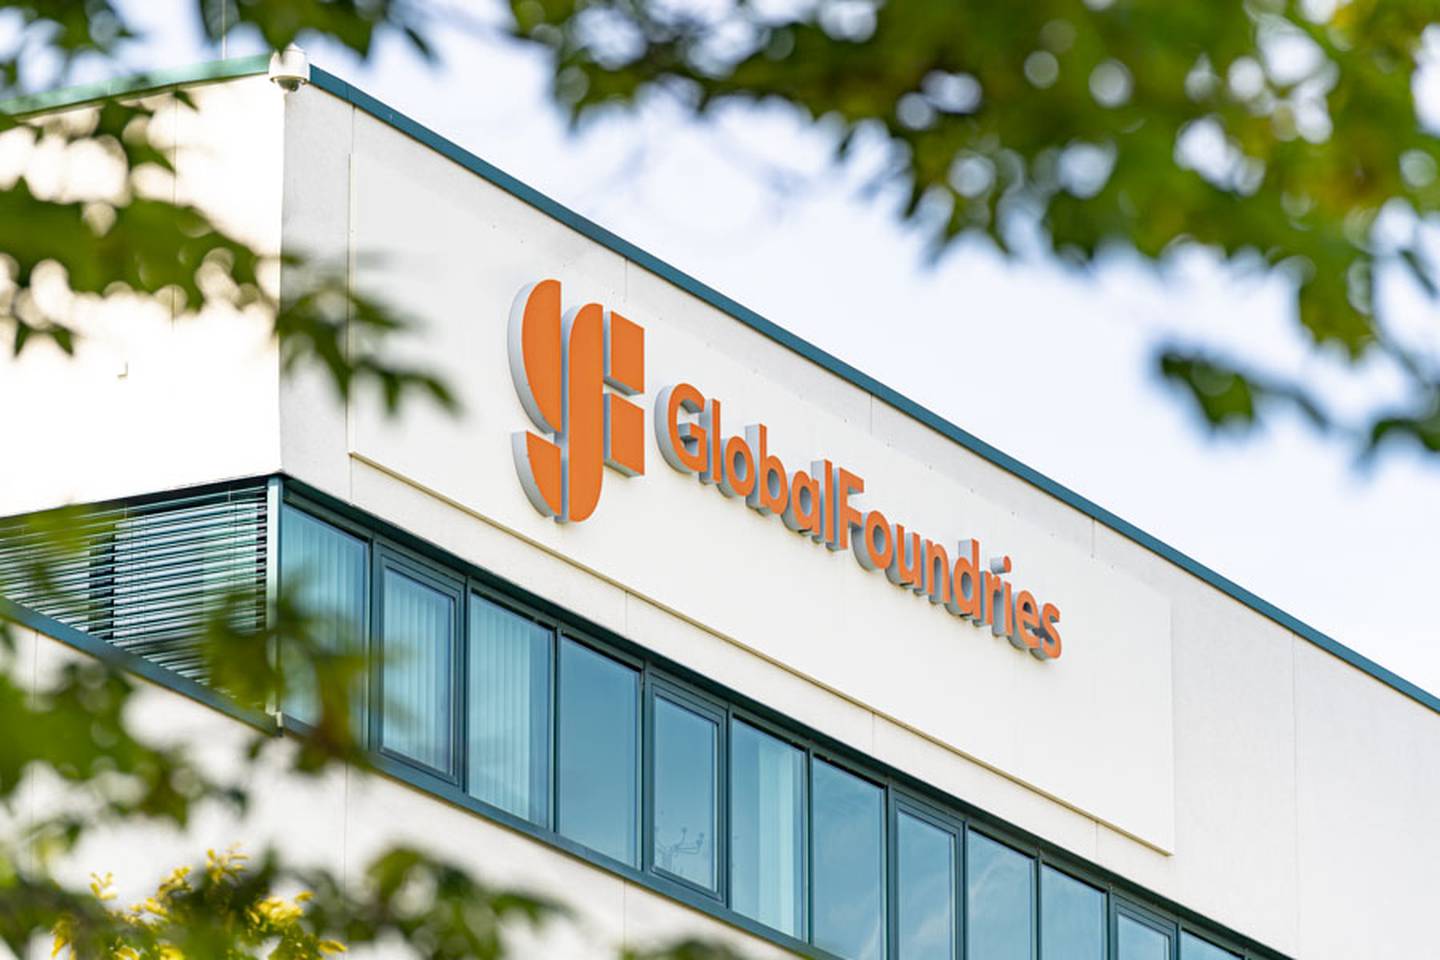 GlobalFoundries' headquarters are in Malta, New York, 175 miles north of New York City. Image: Mubadala